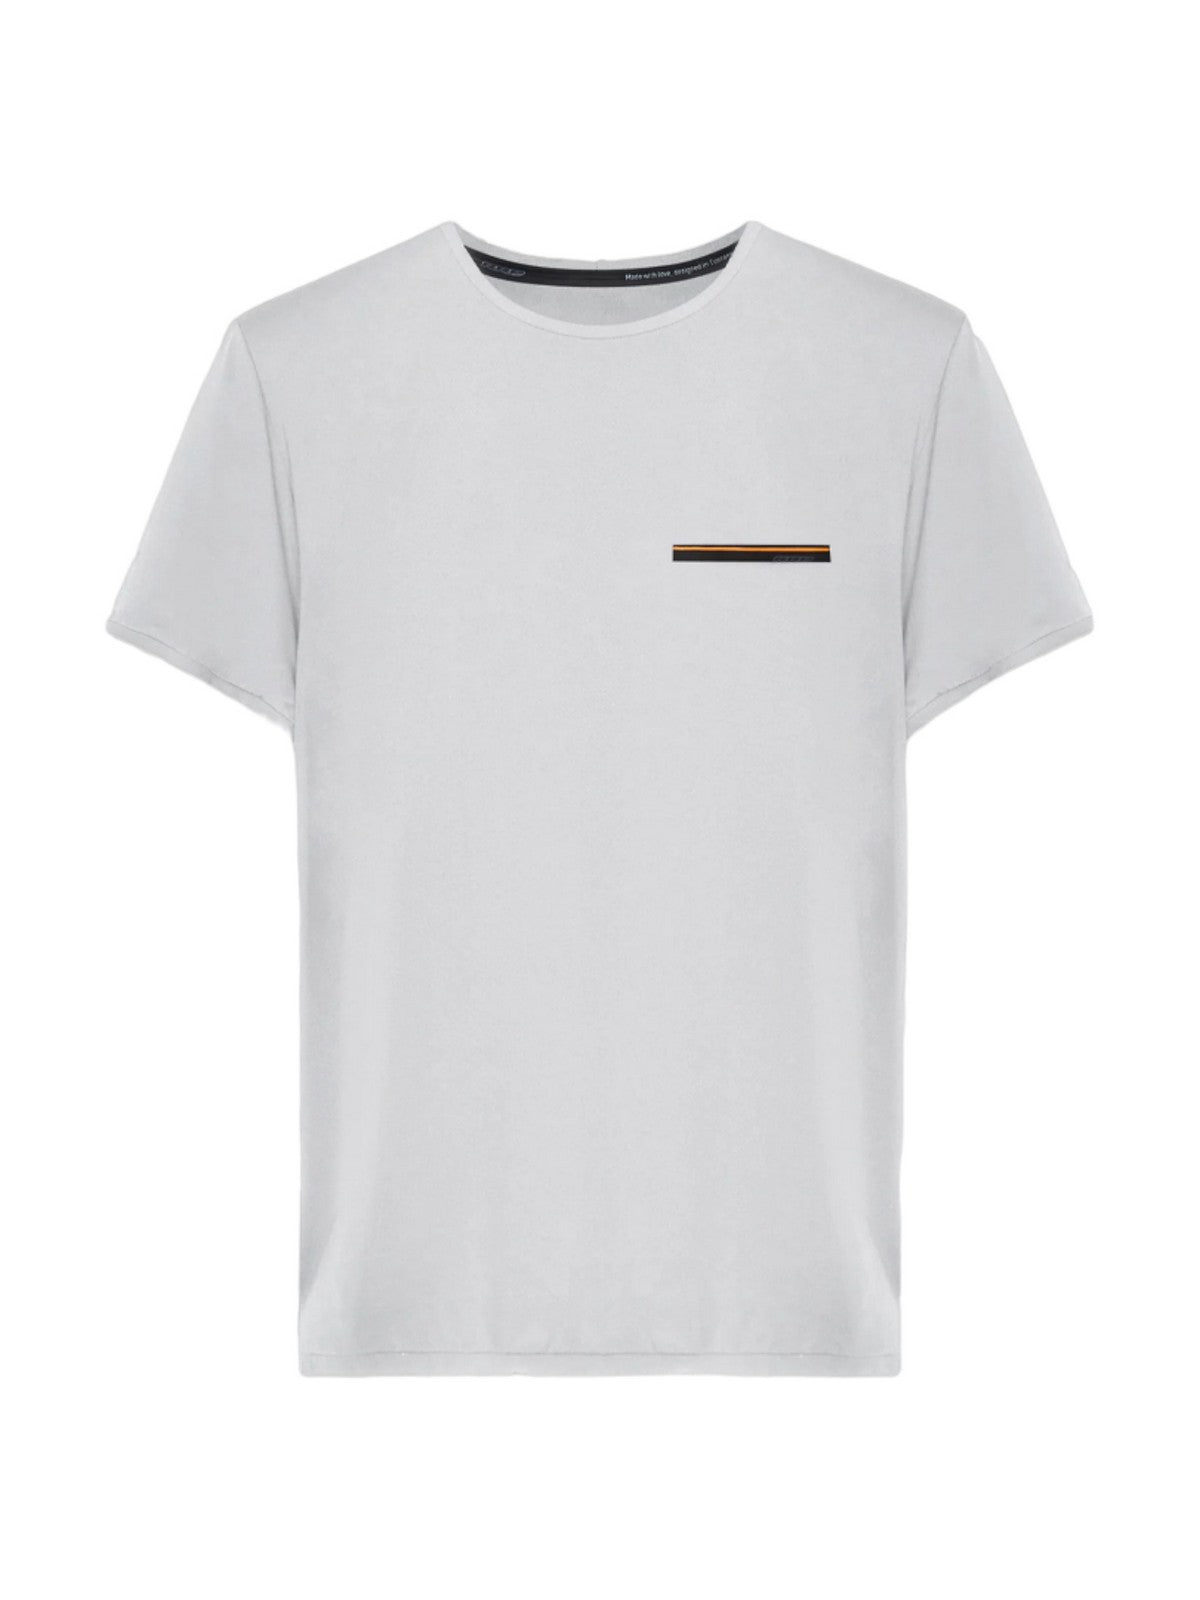 RRD T-Shirt e Polo Uomo  23161 09 Bianco